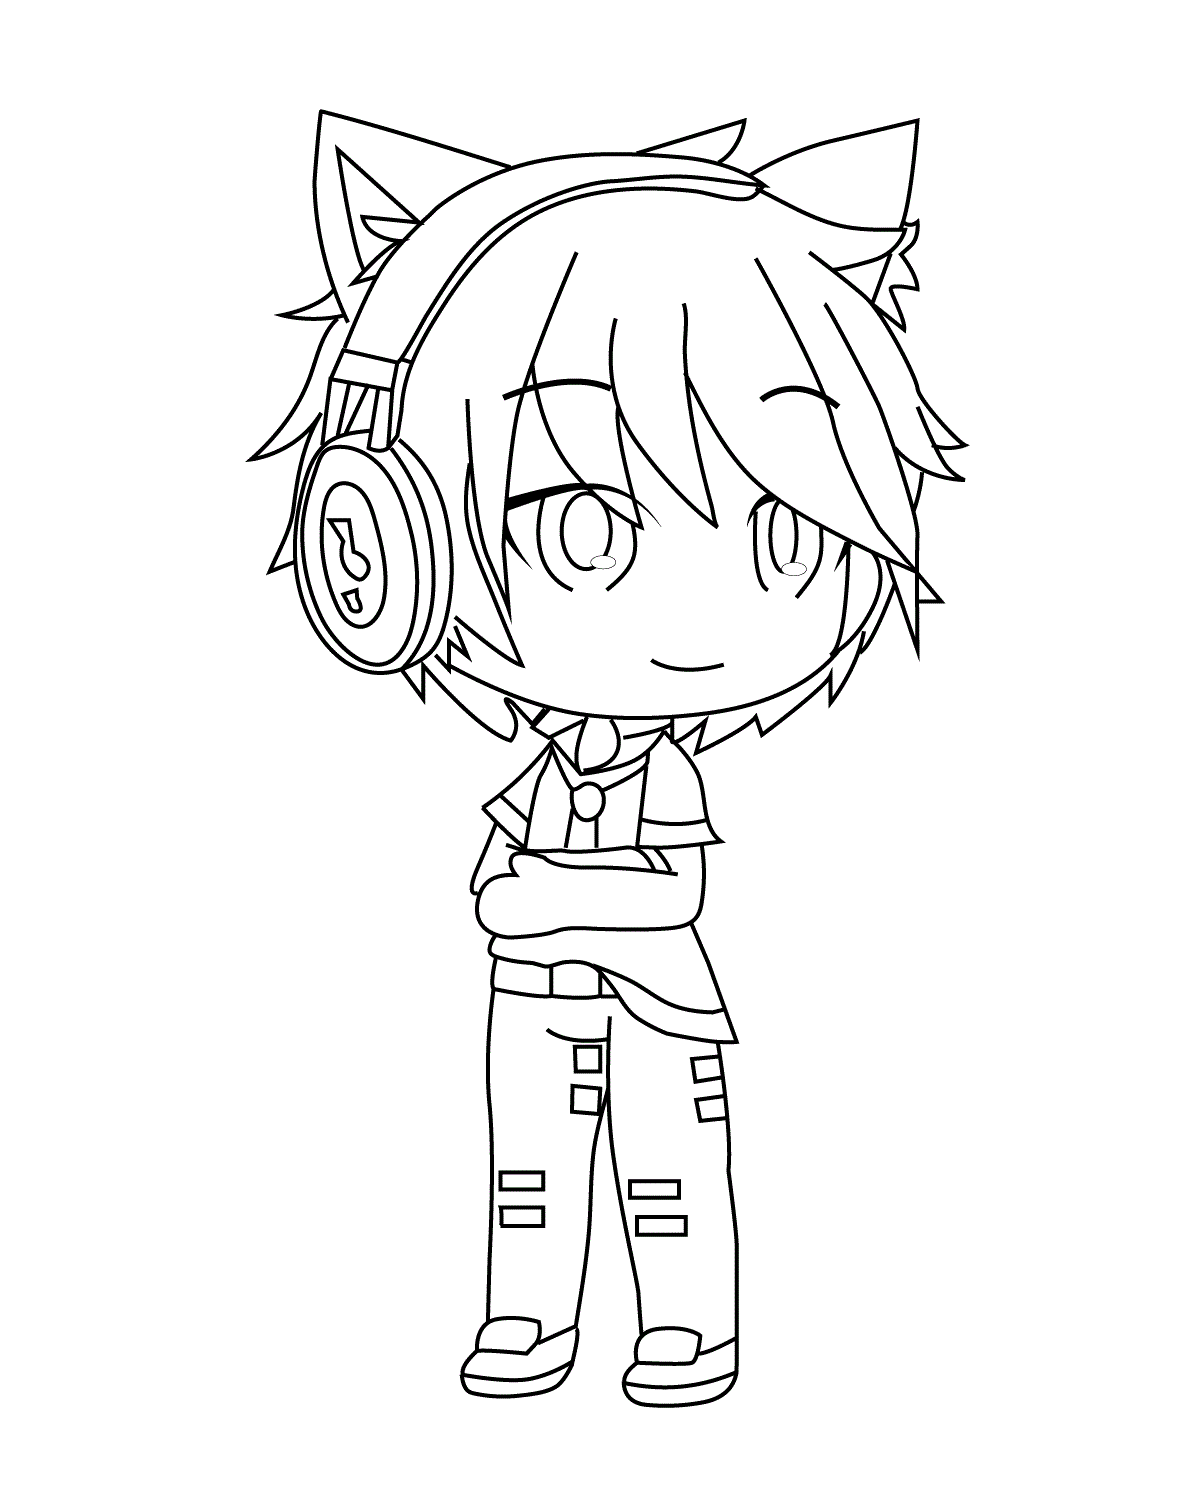 Cat boy is wearing headphone from Gacha Life